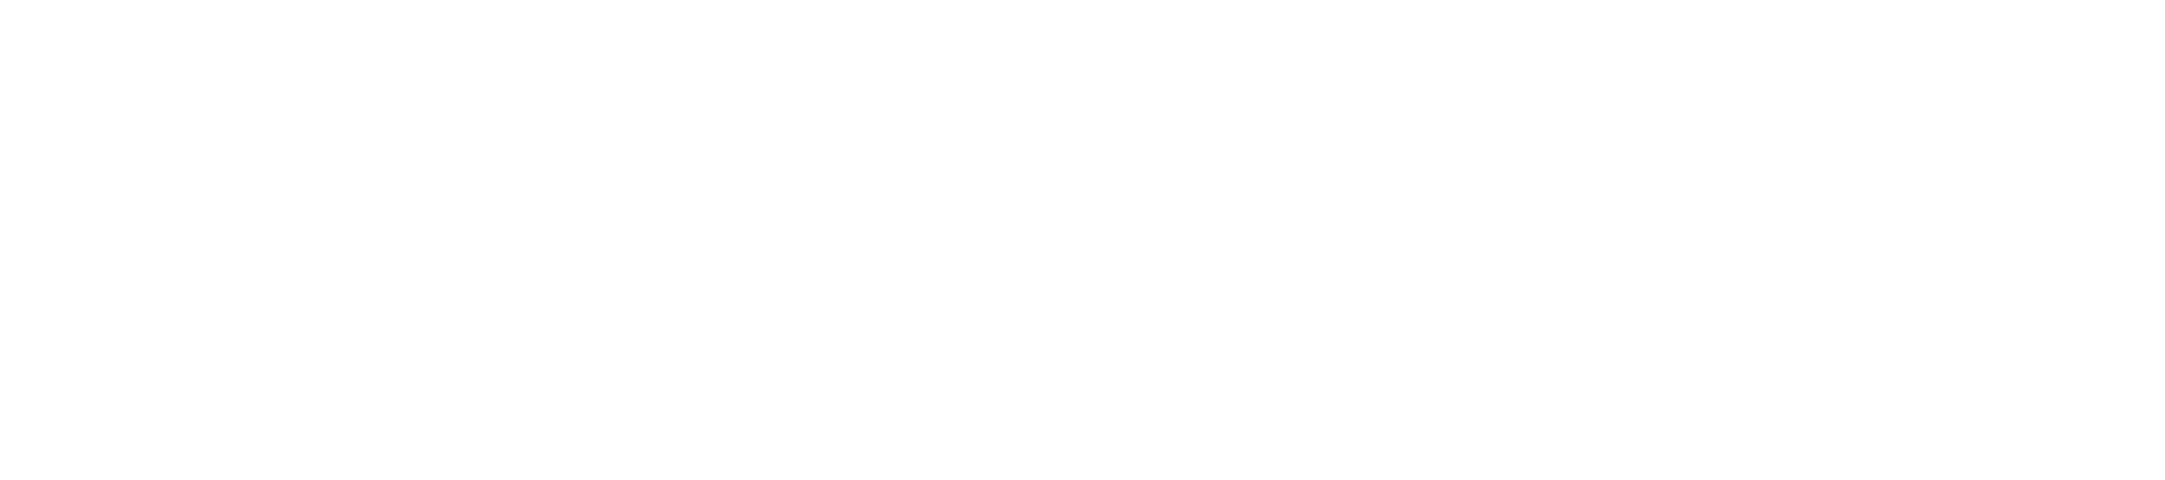 World 100 Reputation Network Logo _ White